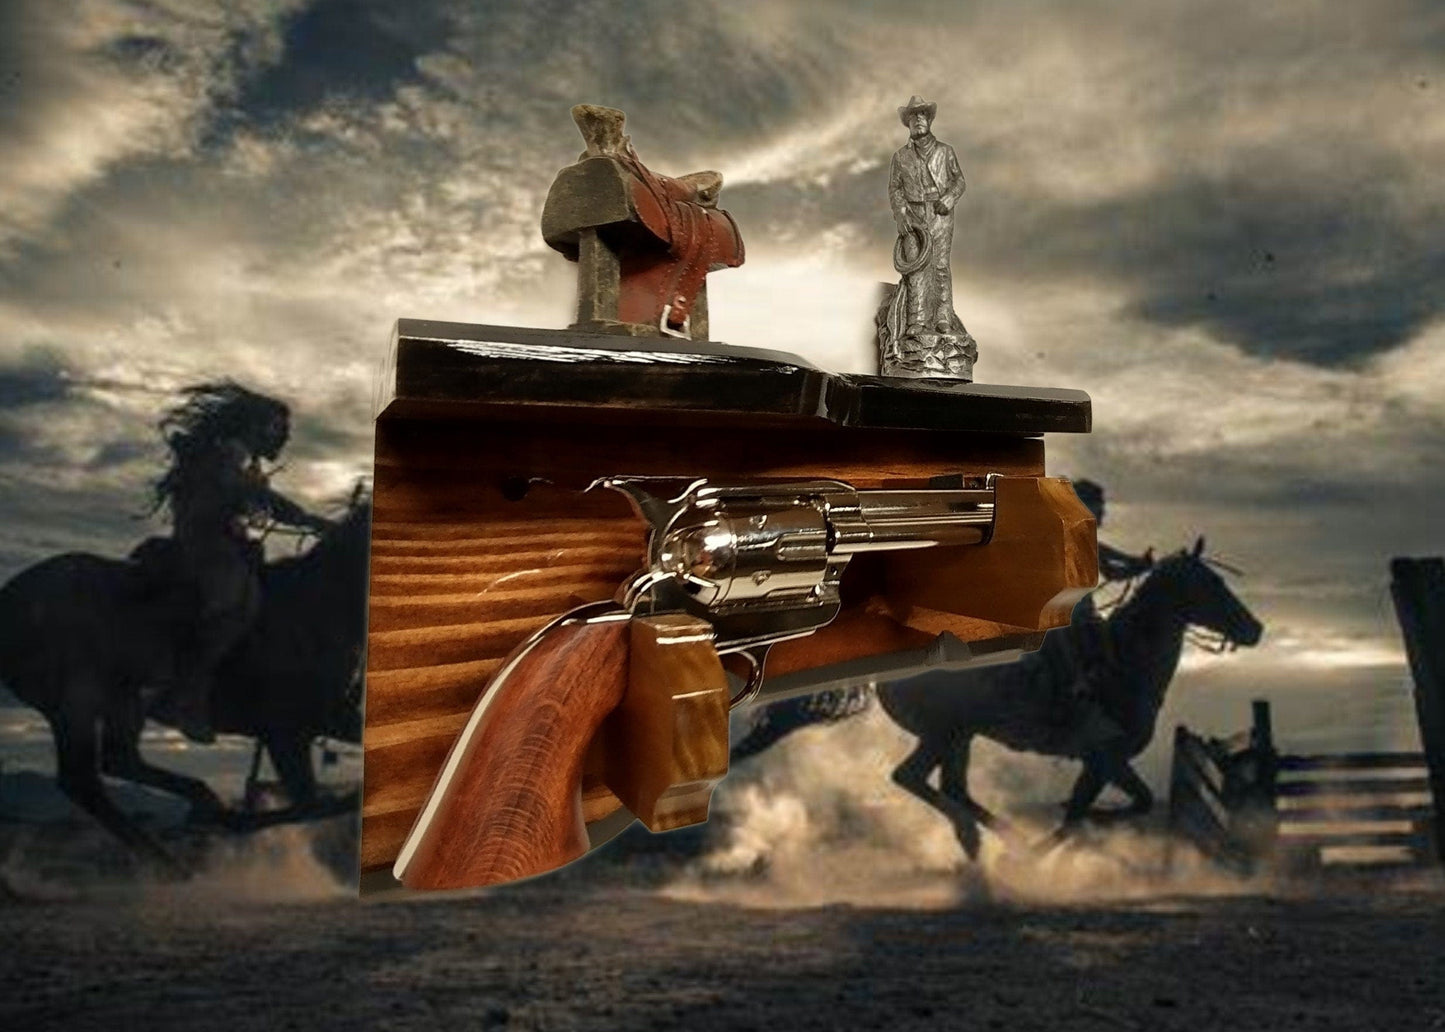 walkerwoodgifts Rustic Pistol Shelf Display Gun Rack Live Edge Wall Mount Western Décor Gift